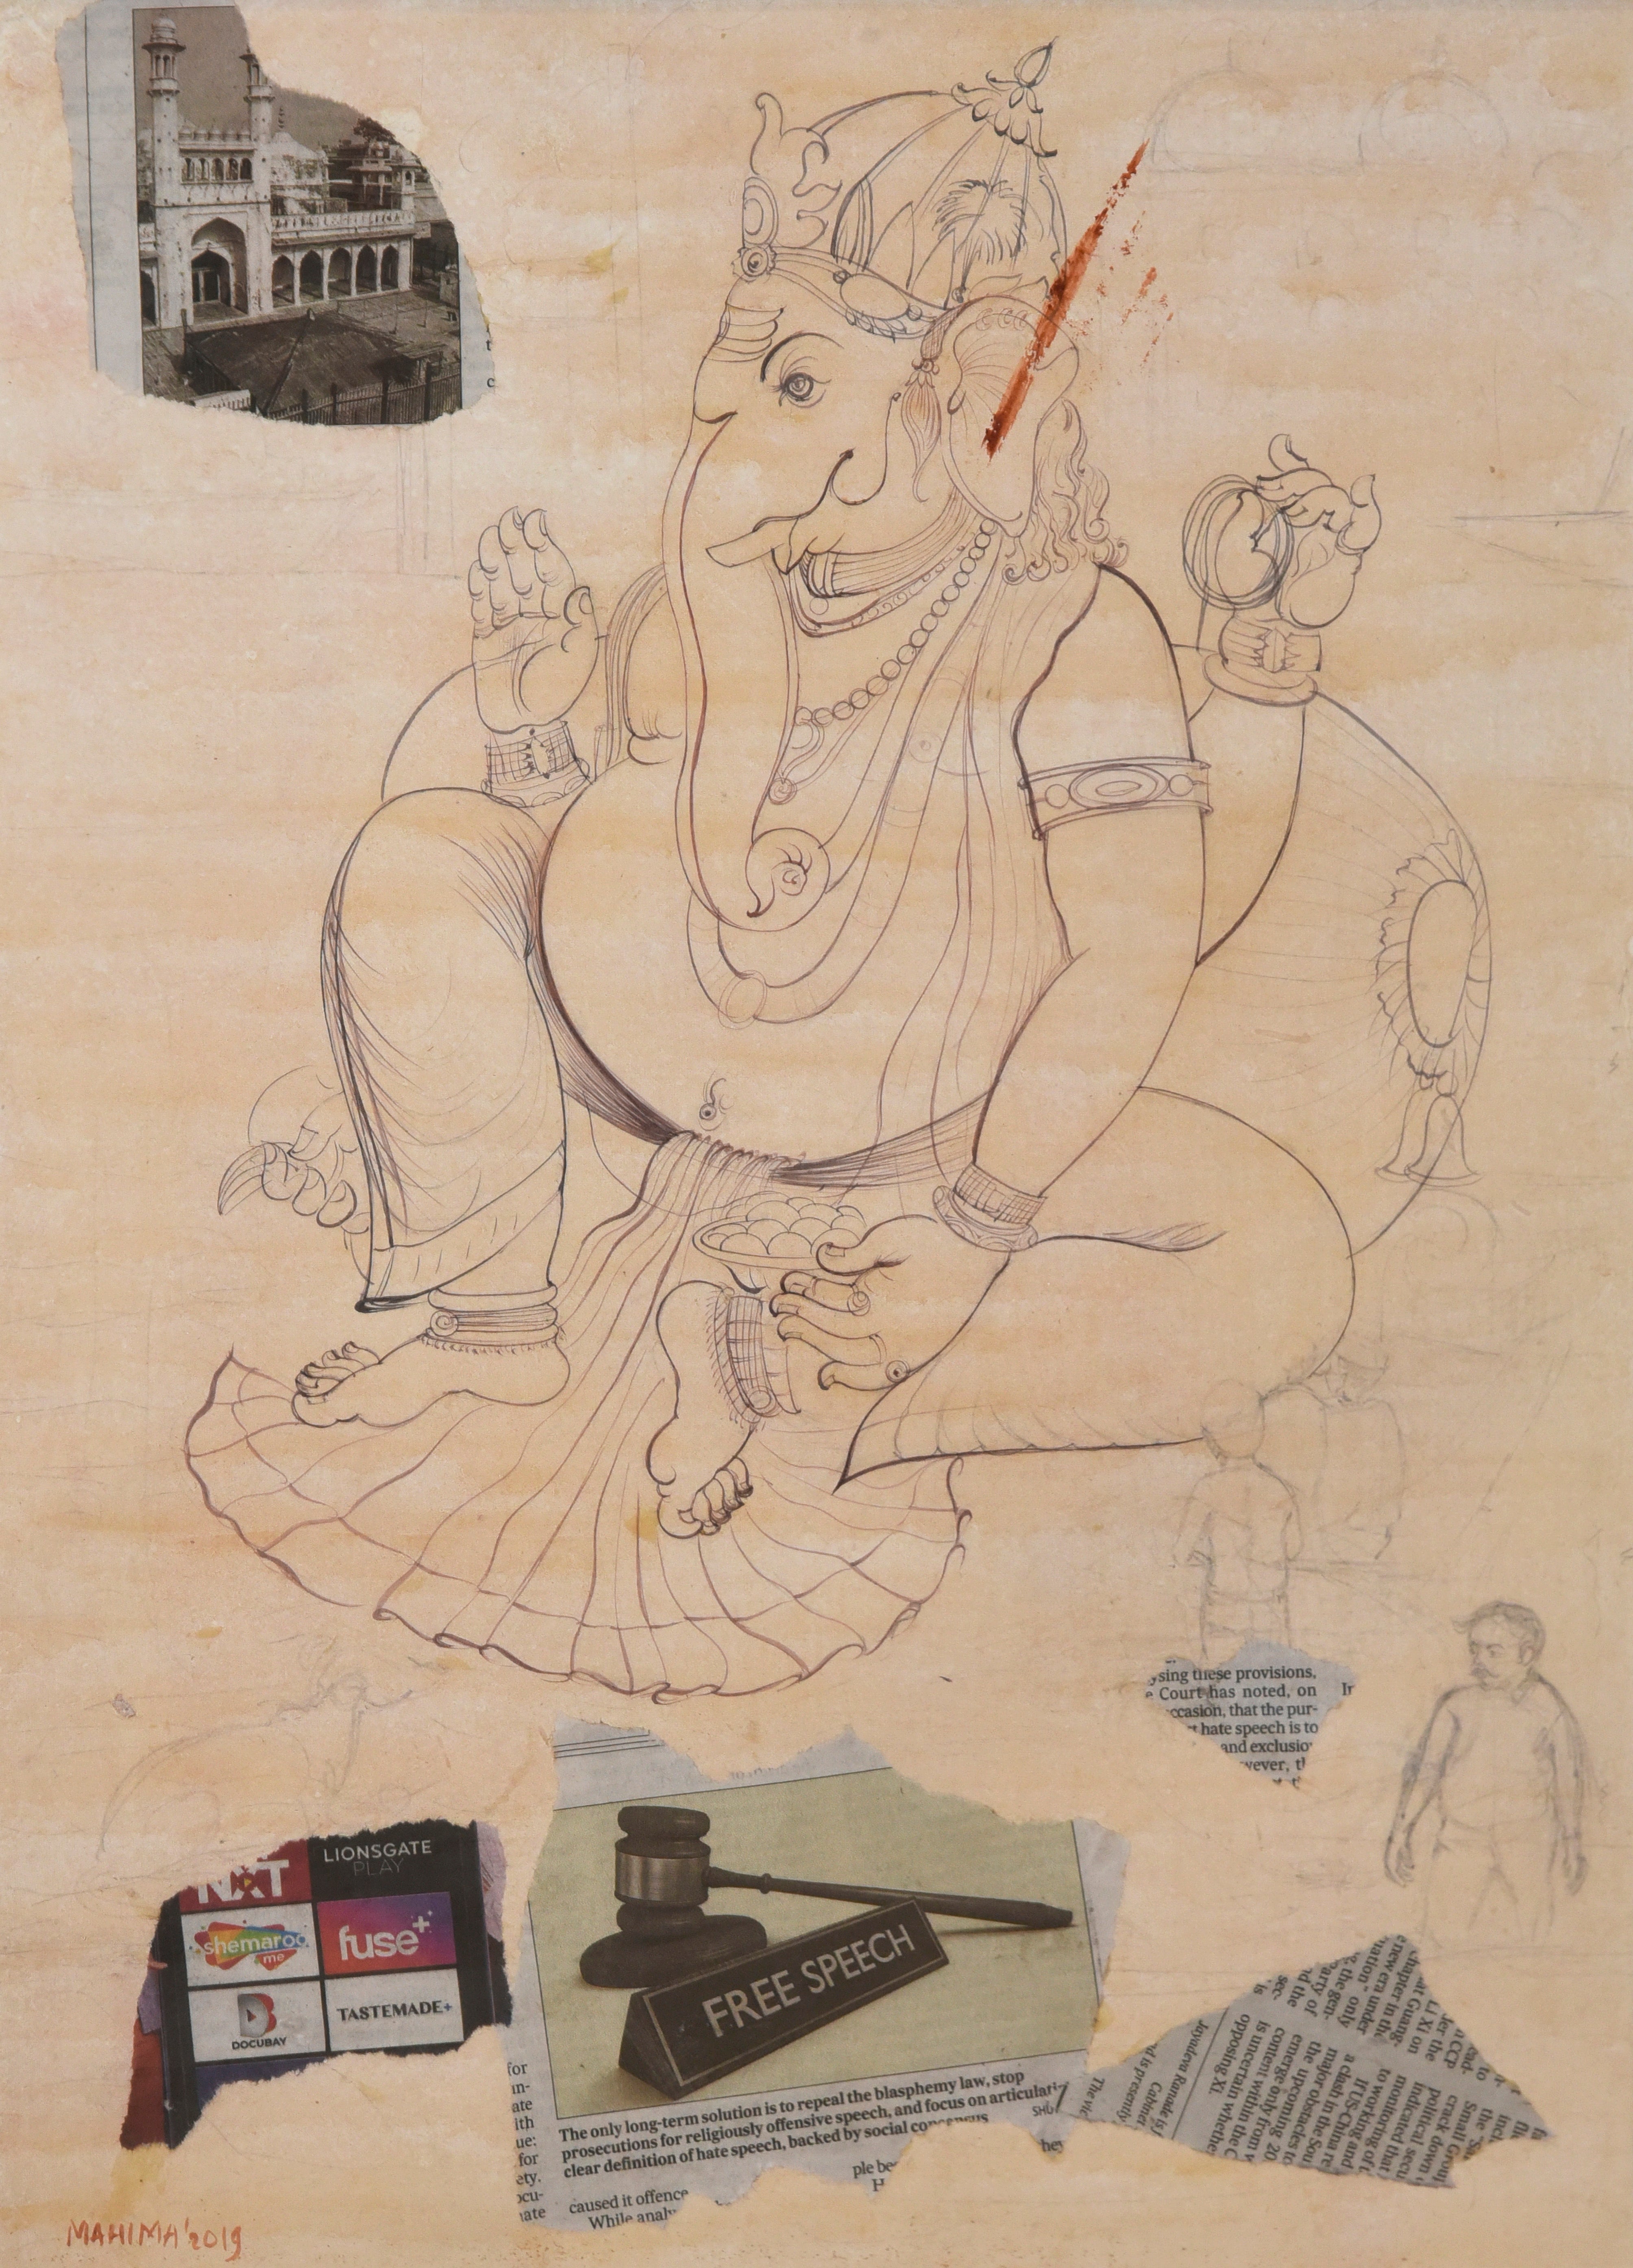 Print - Free Speech with Ganesha